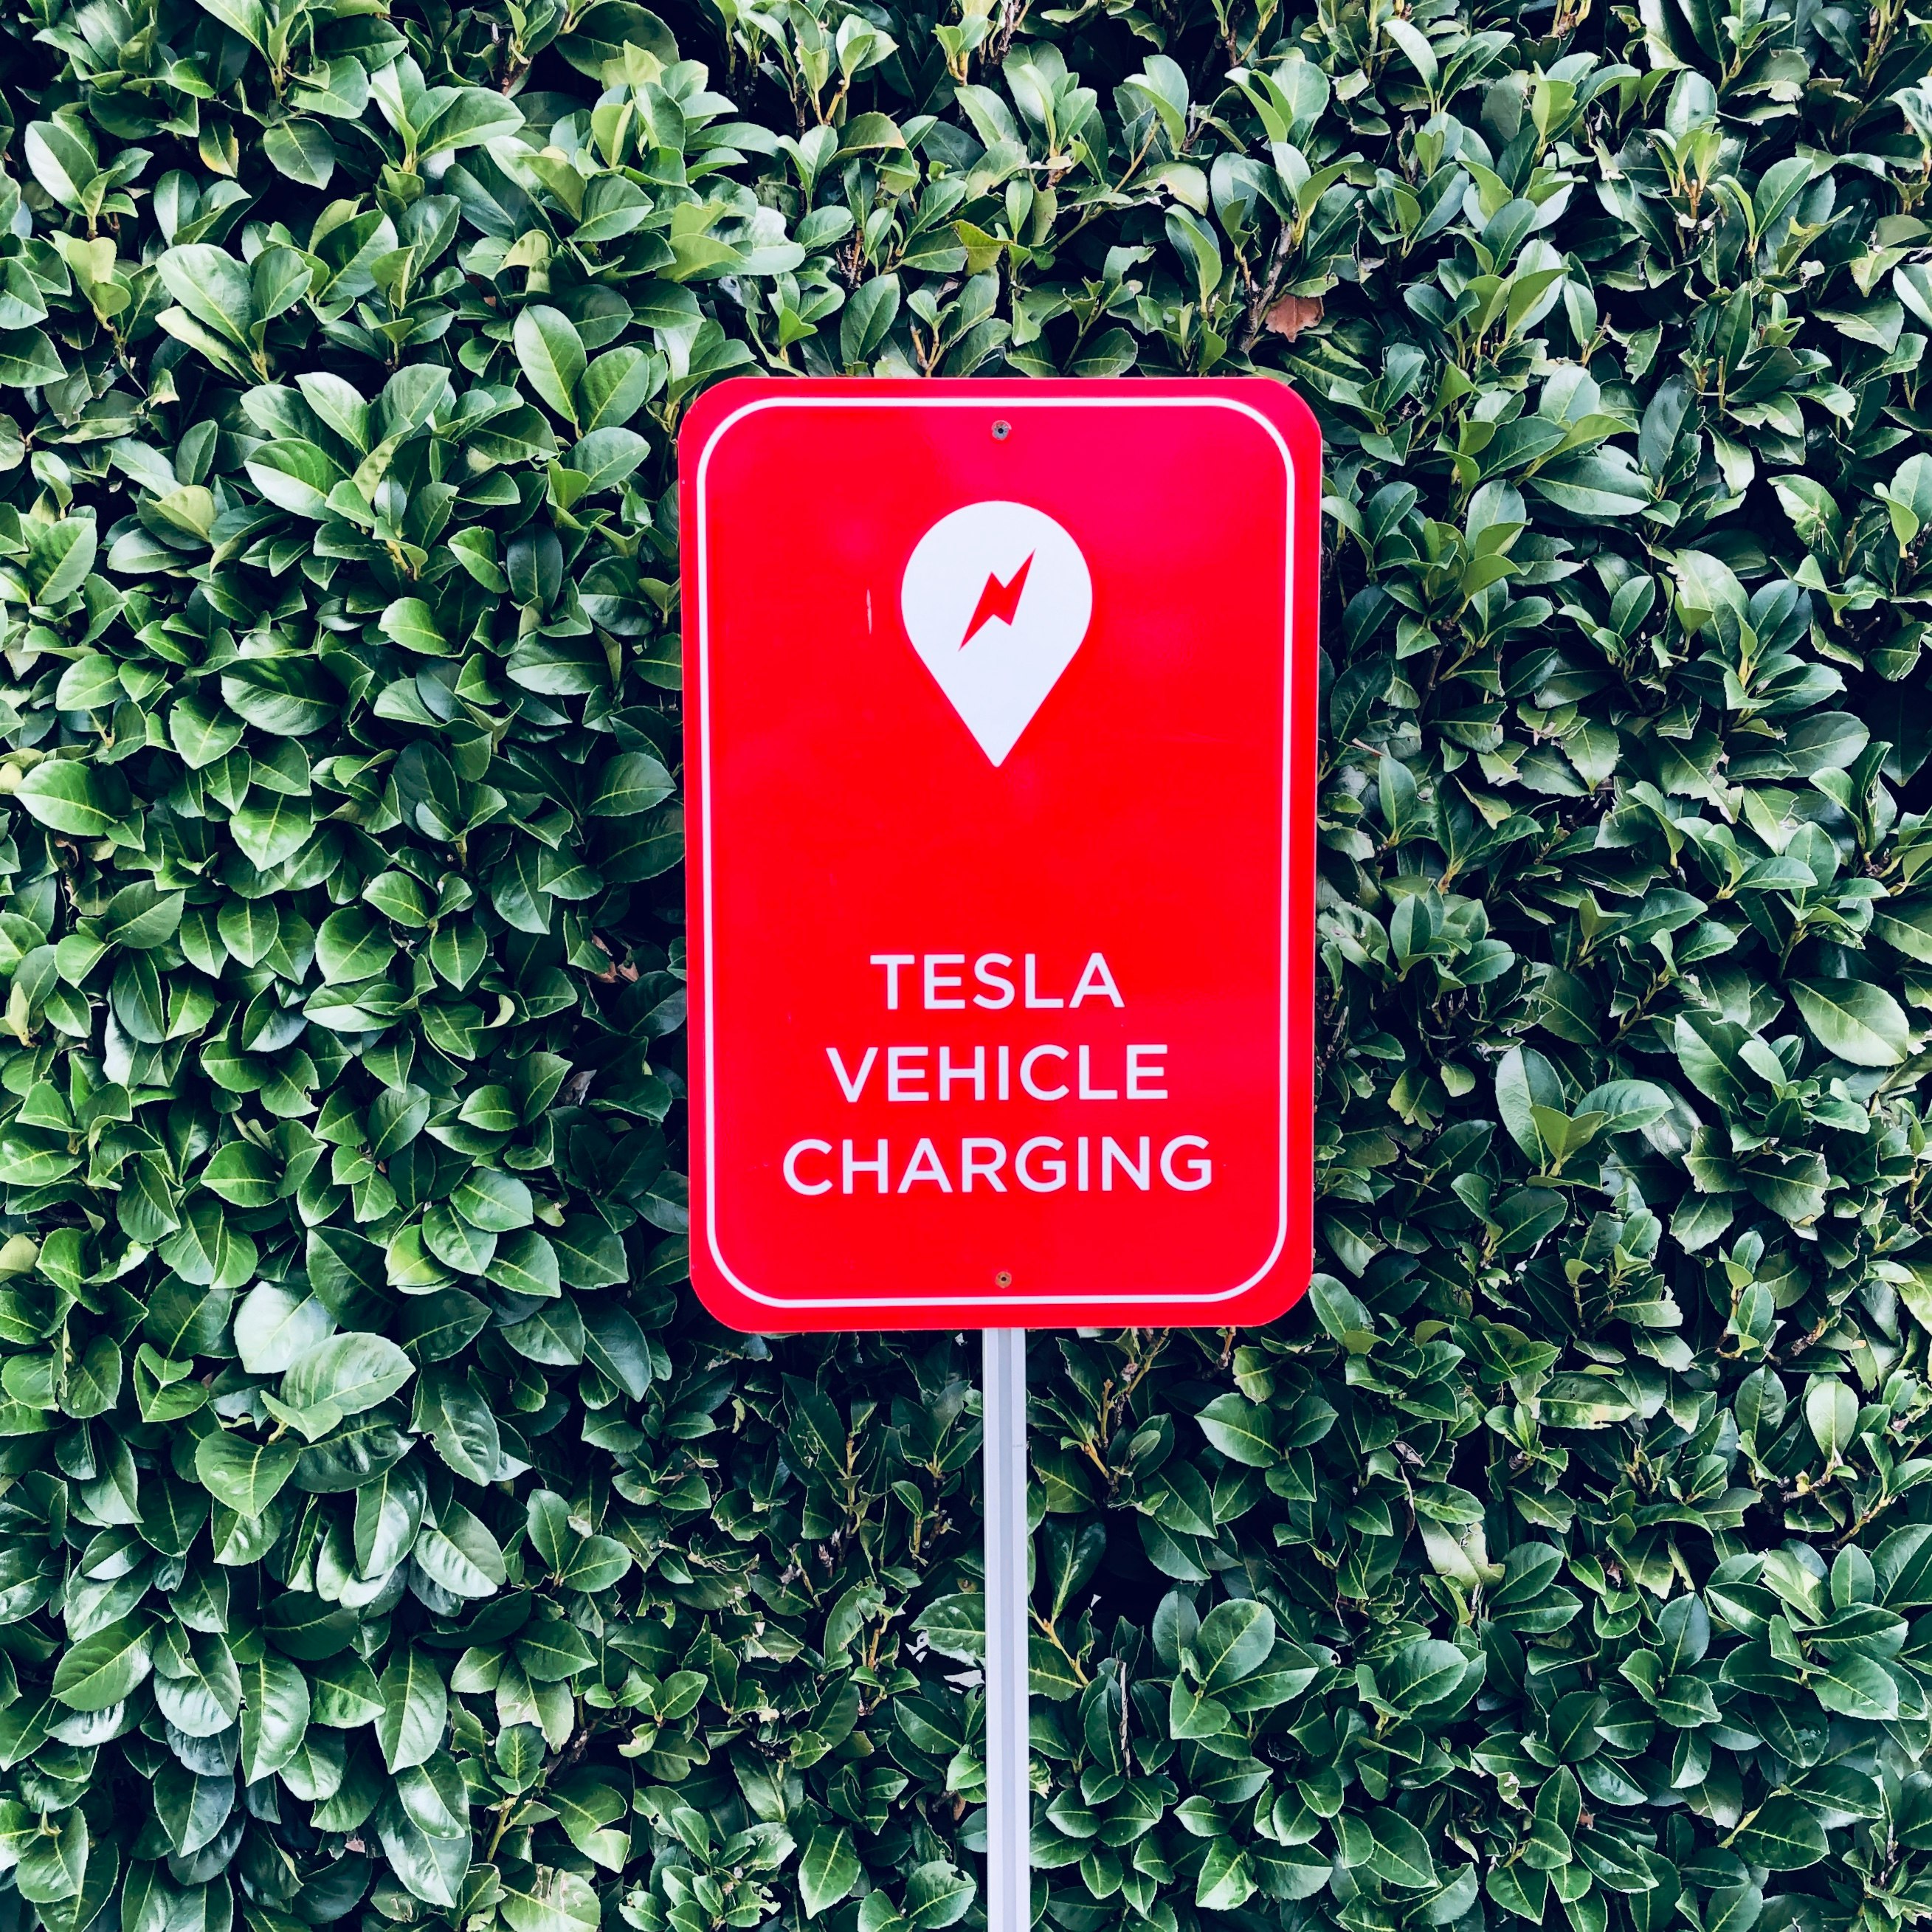 Tesla Vehicle Charging sign